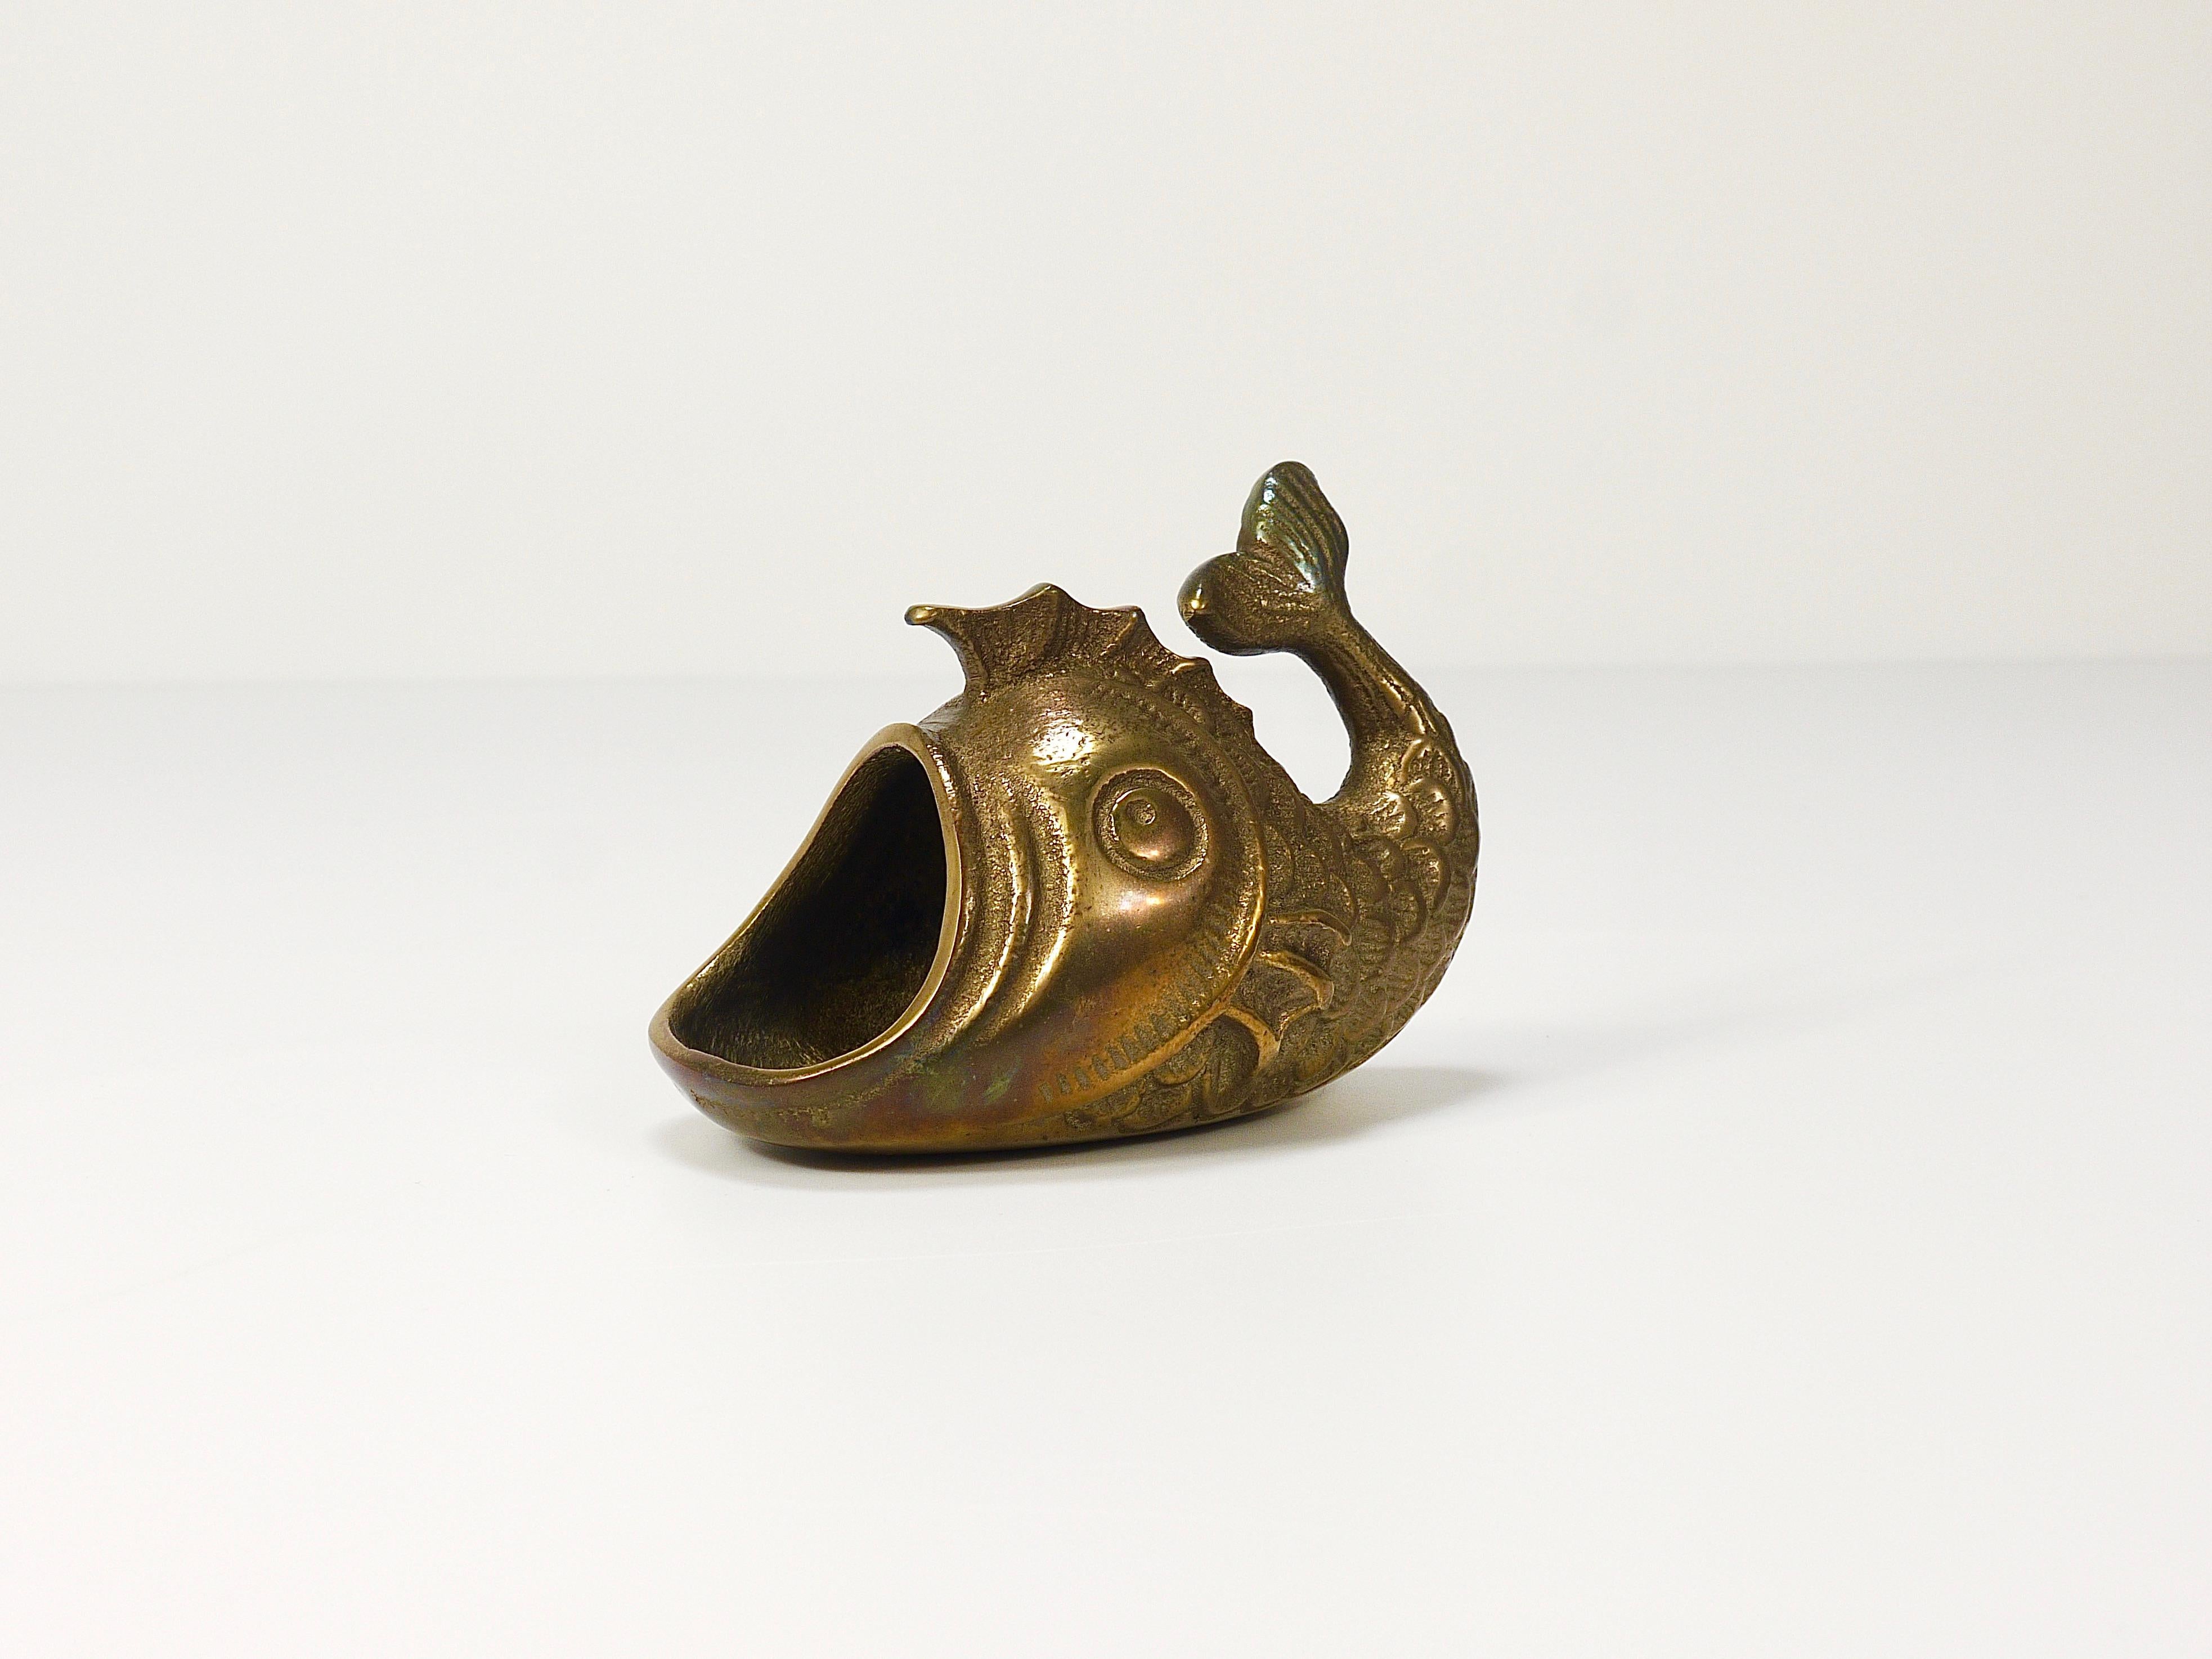 Walter Bosse Midcentury Fish Sculpture Brass Ashtray, Austria, 1950s For Sale 9